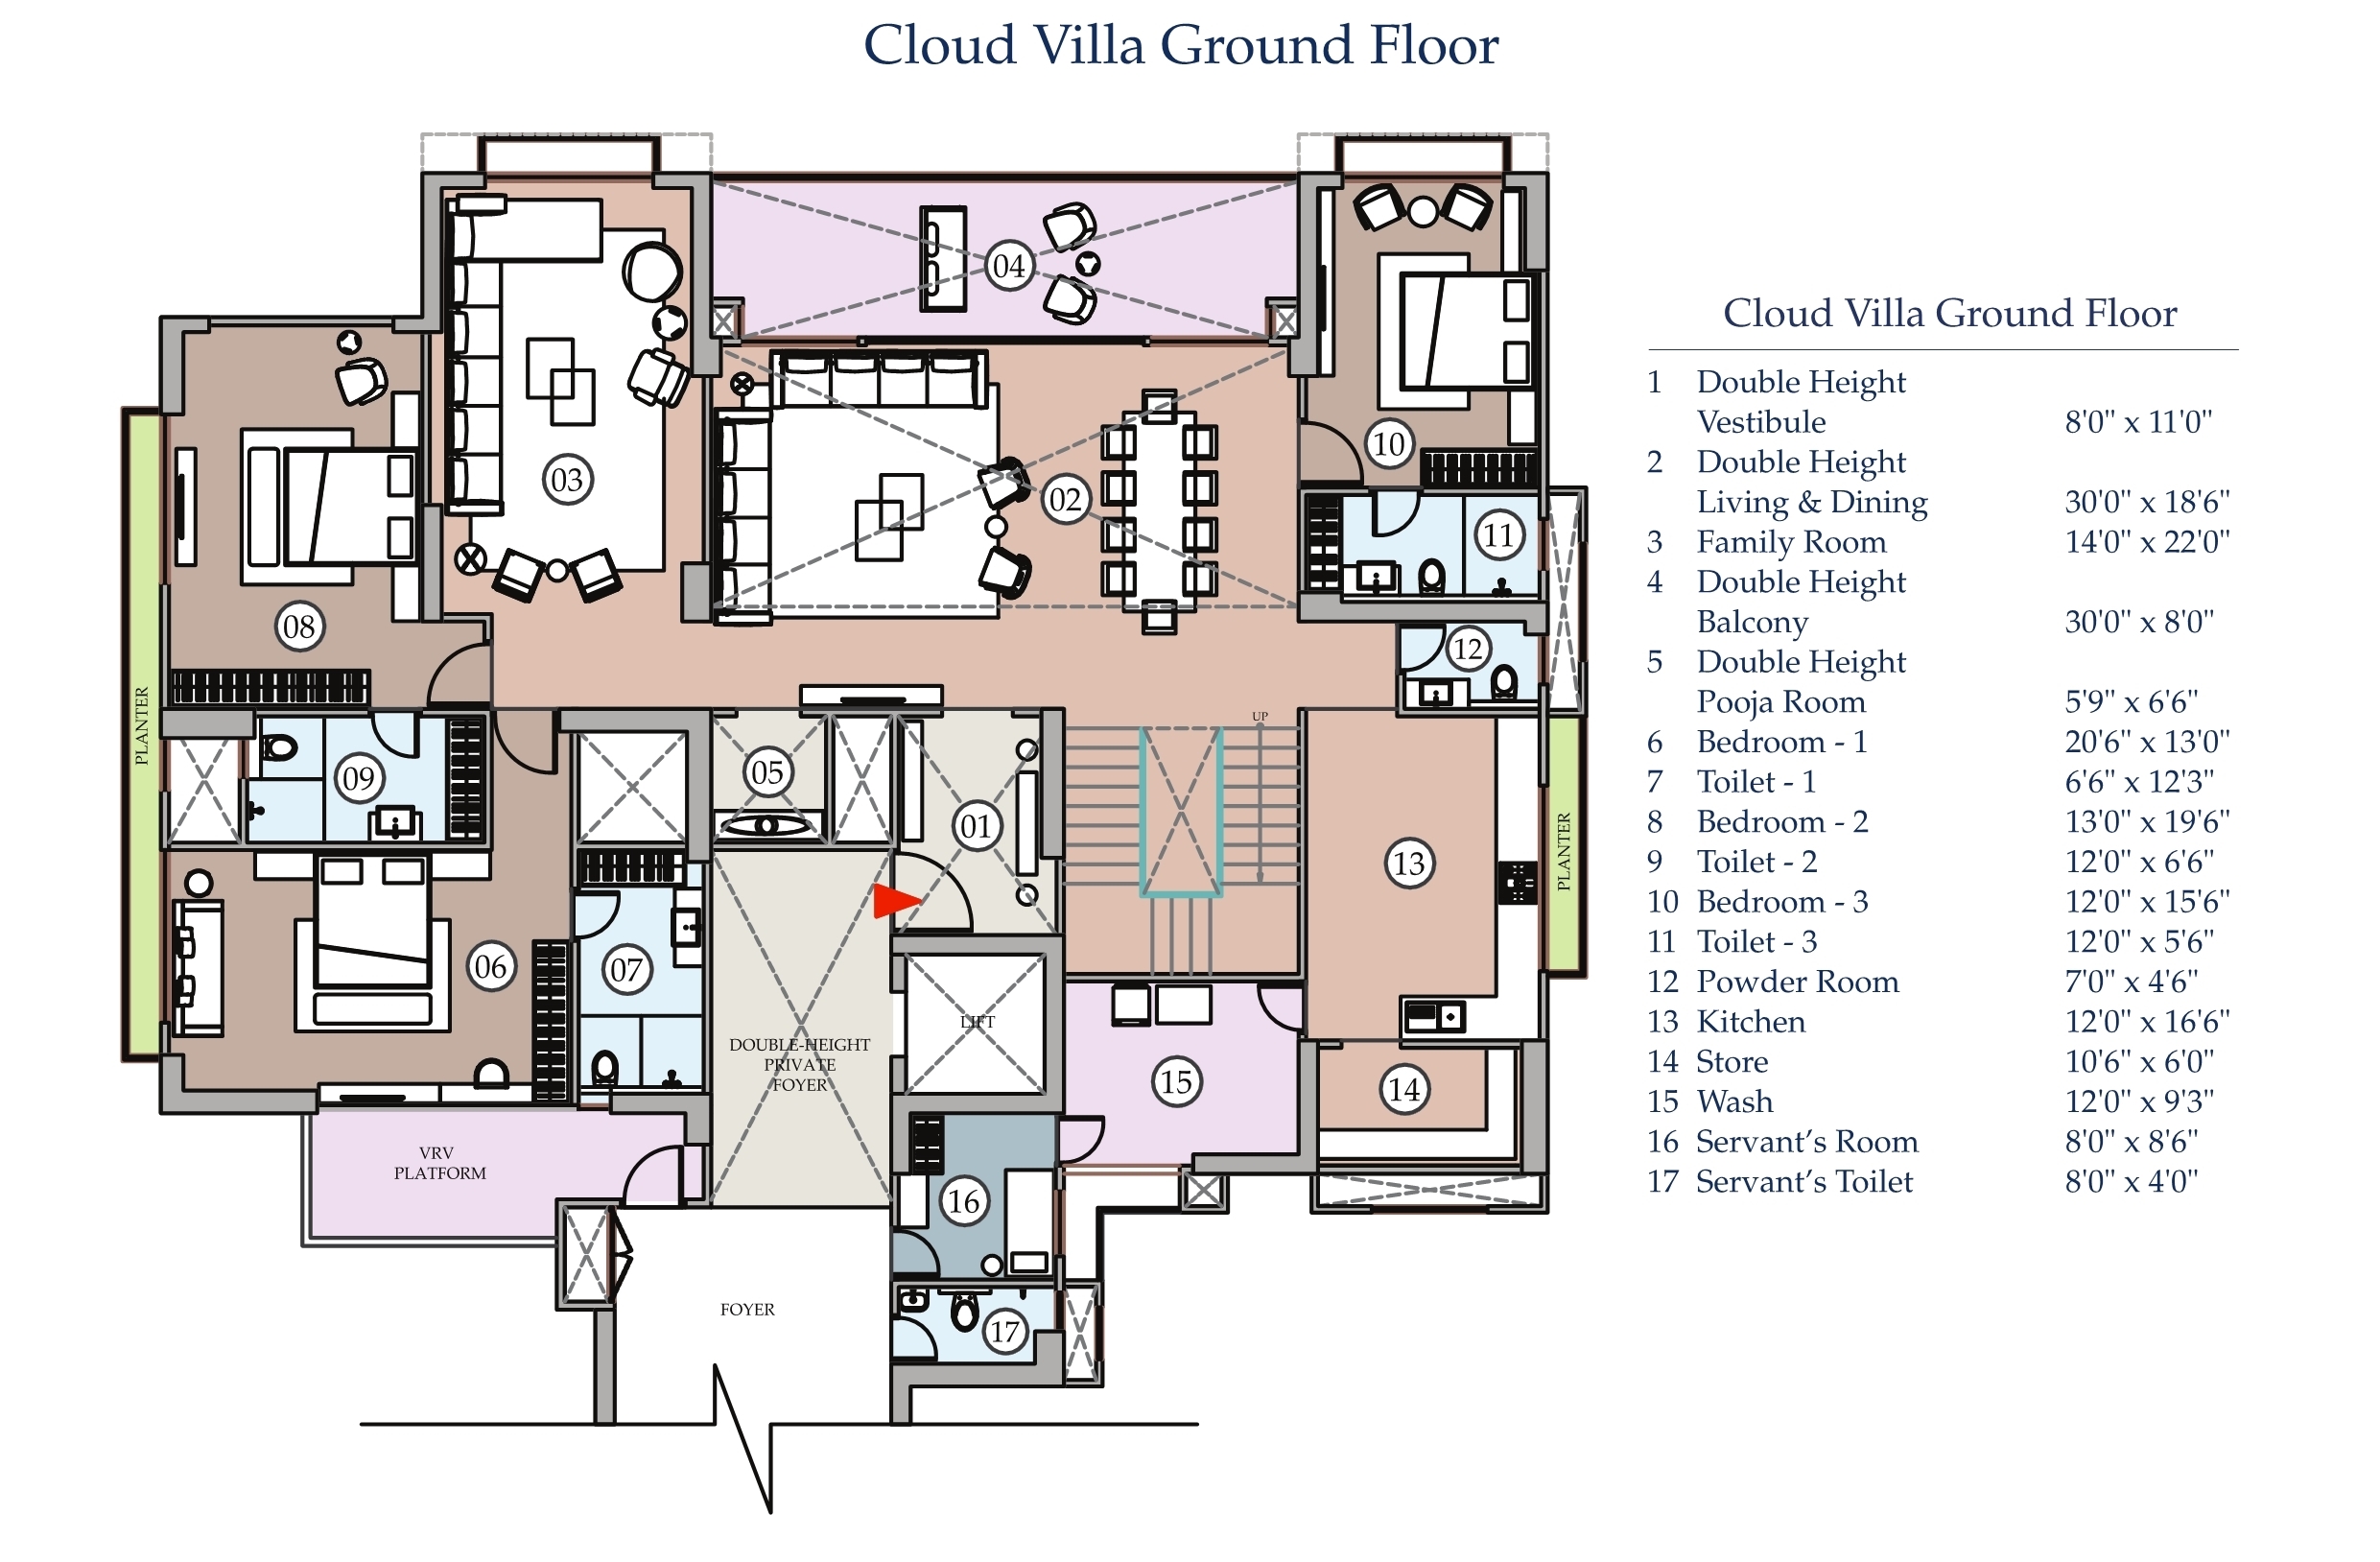 Cloud Villa Ground Floor Plan